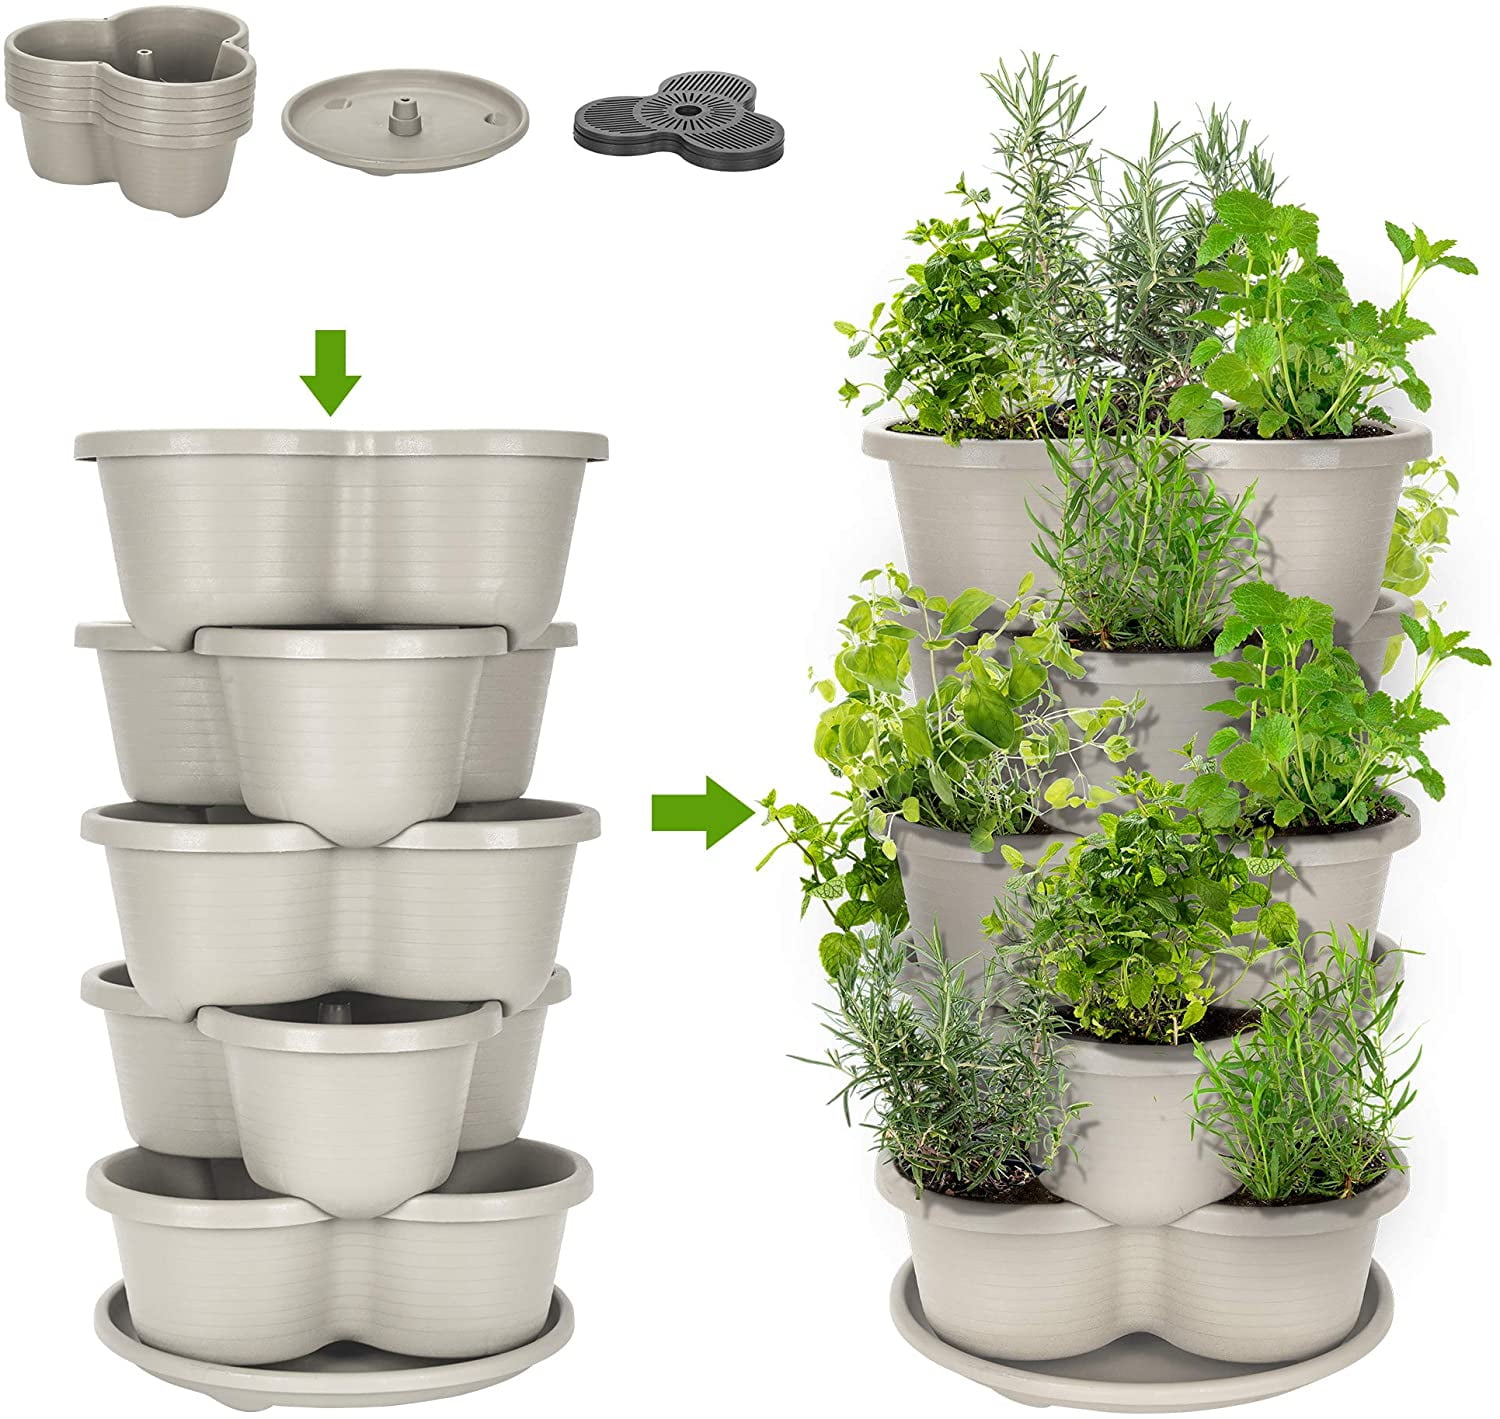 Vertical Stackable Strawberry Herb Garden Planter Flower Veg Pots DIY Guaranteed 